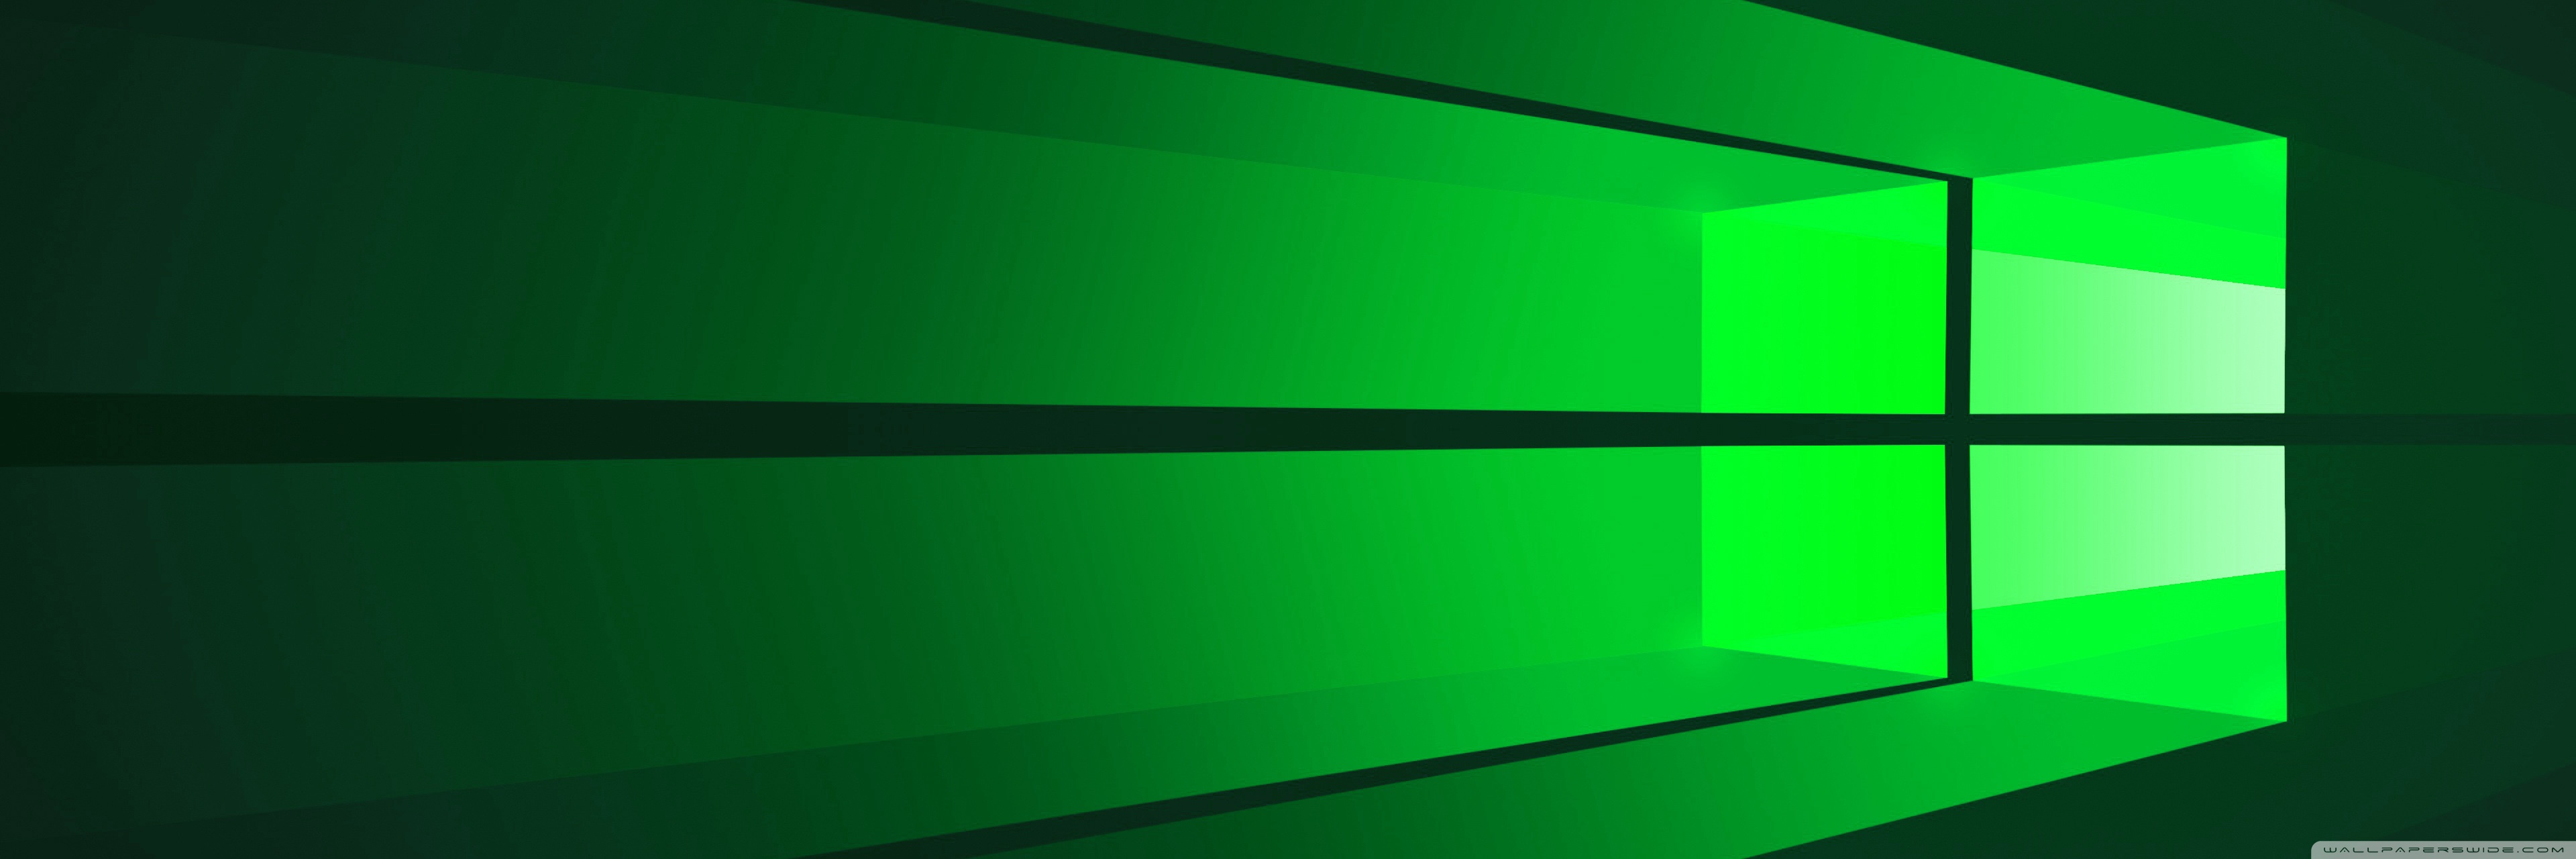 Windows 10 Green Edition Ultra HD Desktop Background Wallpaper for ...